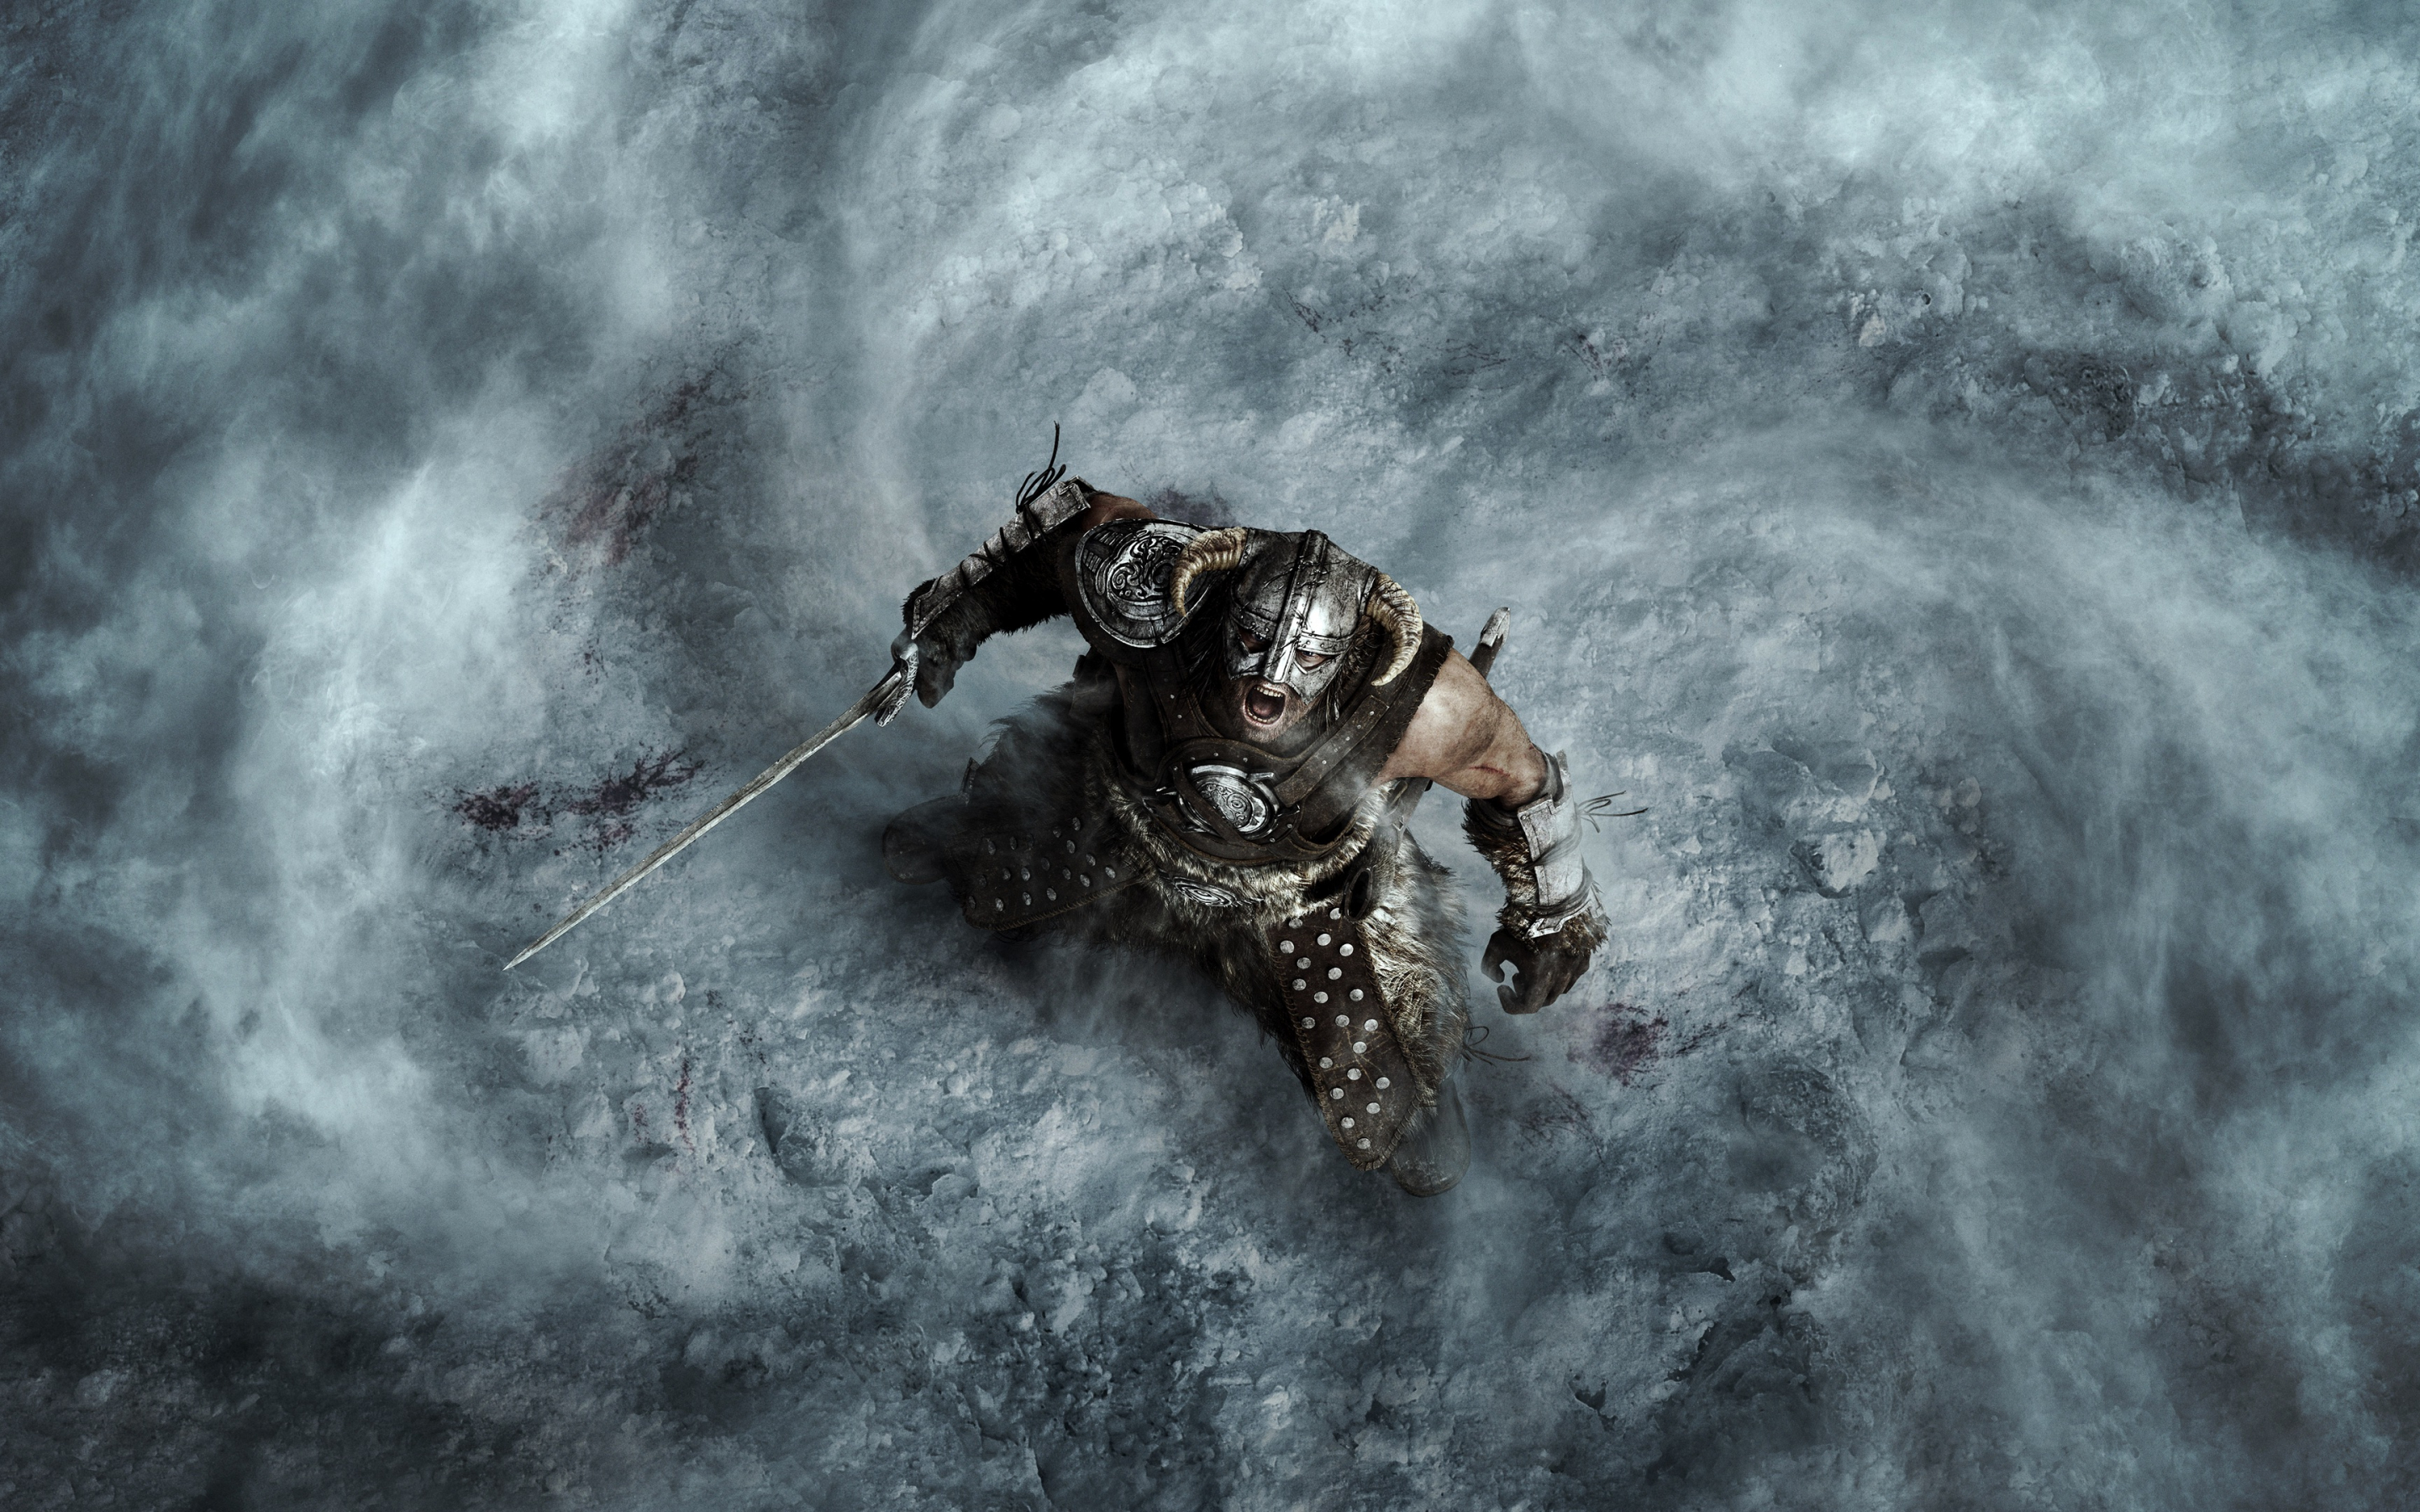 The Elder Scrolls V: Skyrim, warrior, video game, 2880x1800 wallpaper